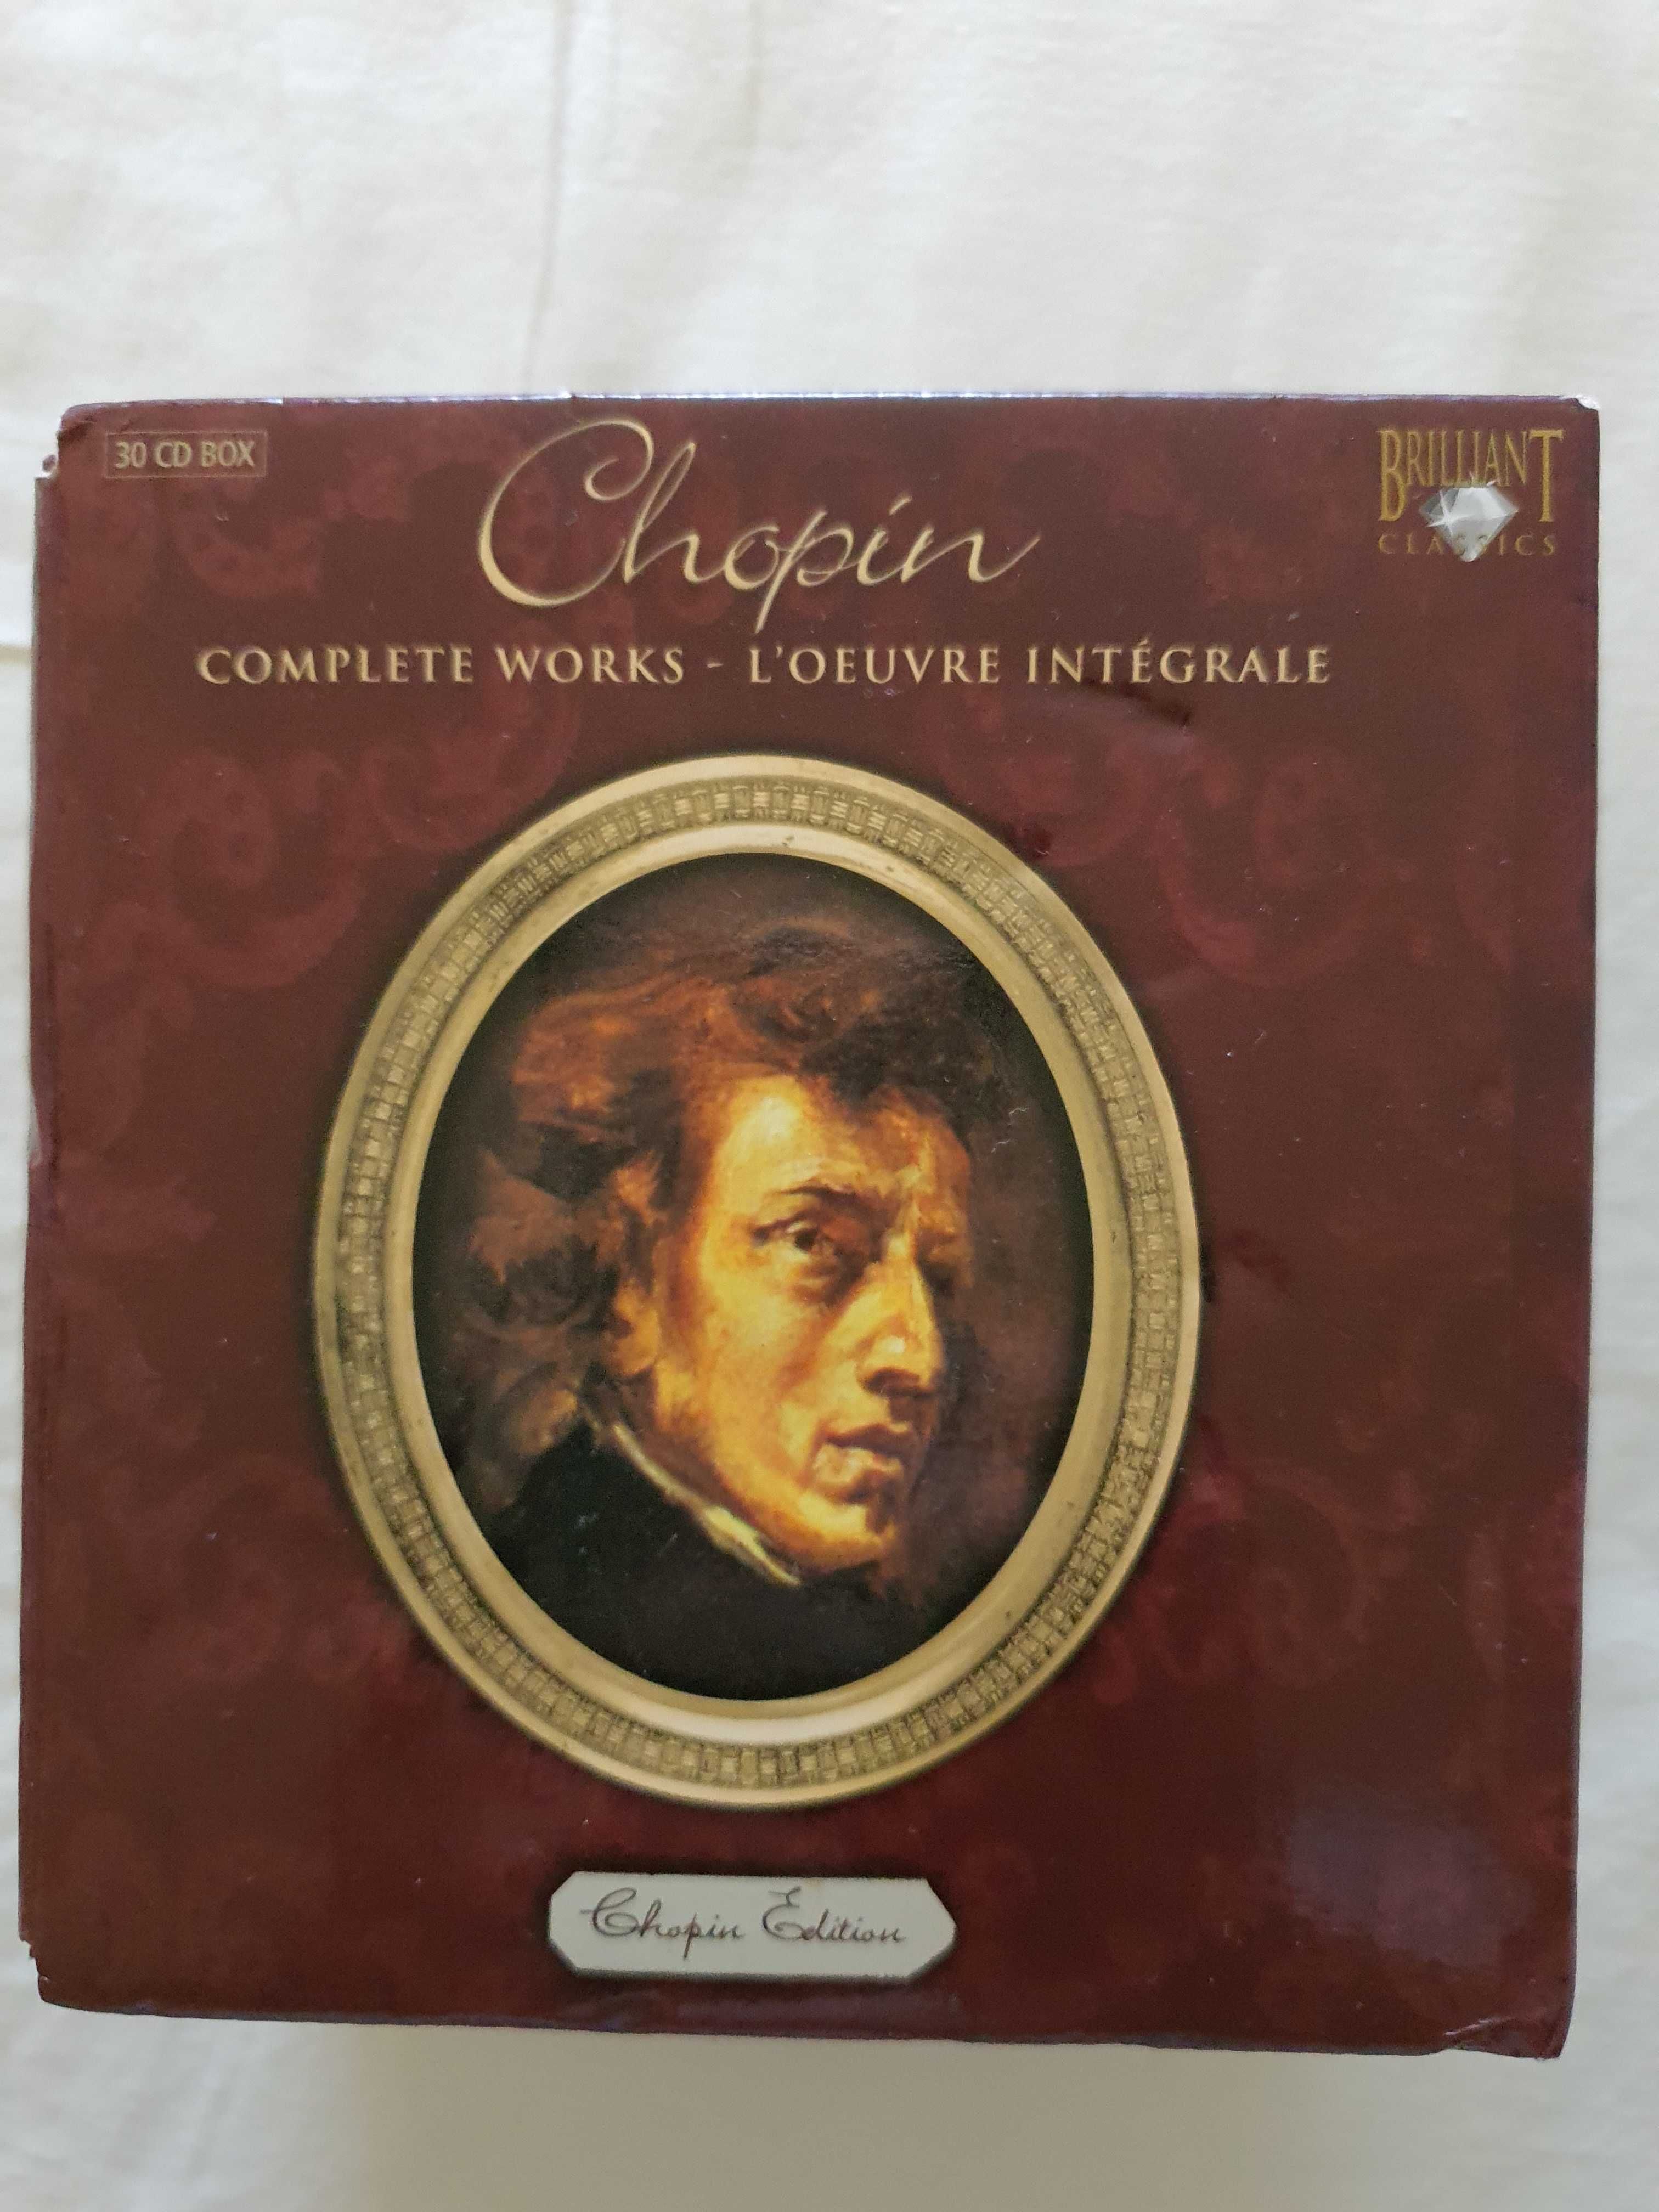 Toata opera marelui Chopin pe 30 cd-uri audio